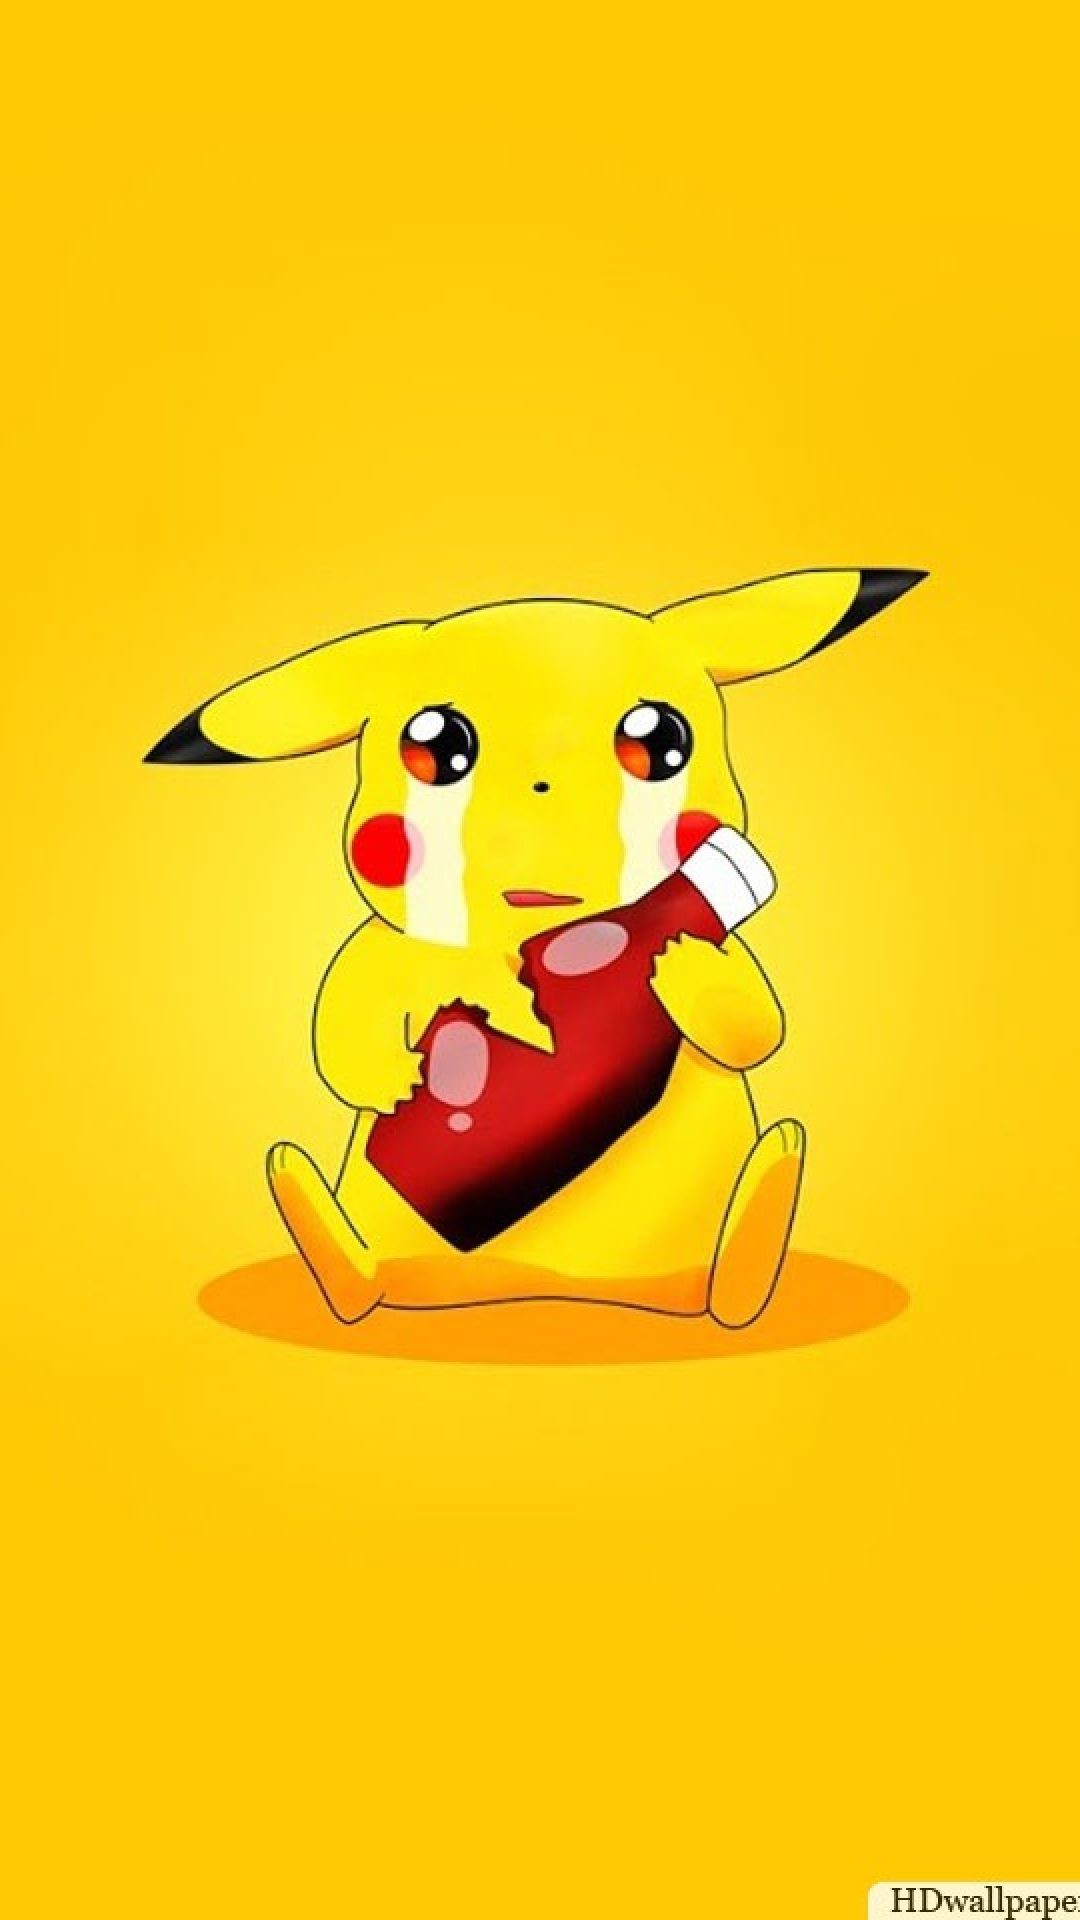 Cute Pikachu Images - Pikachu Wallpaper Ipad - 1080x1920 Wallpaper -  